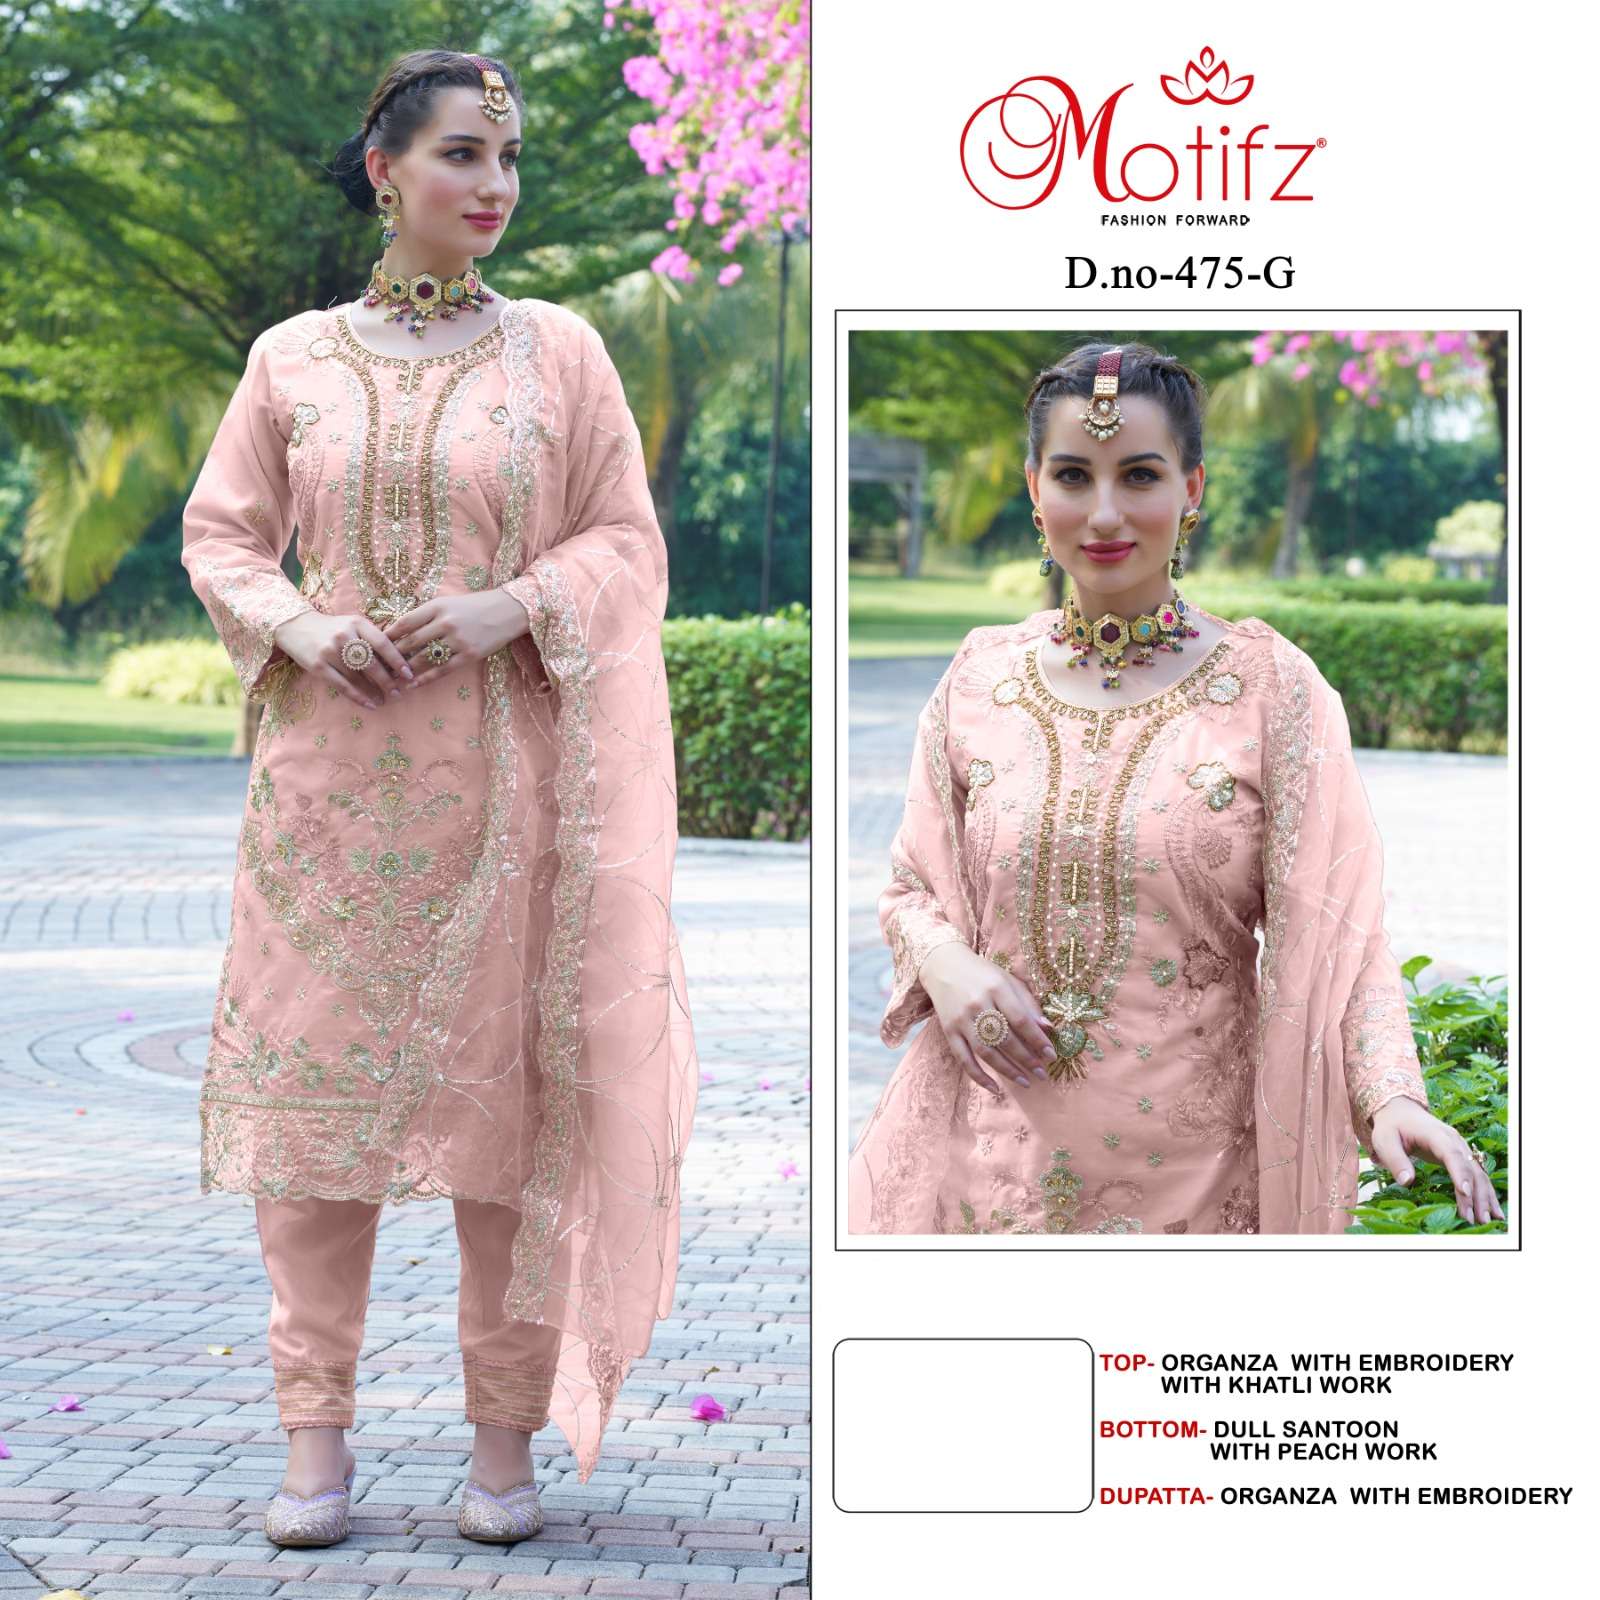 Motifz 475 Organza with Embroidery khatli work Salwar Kameez Wholesale catalog